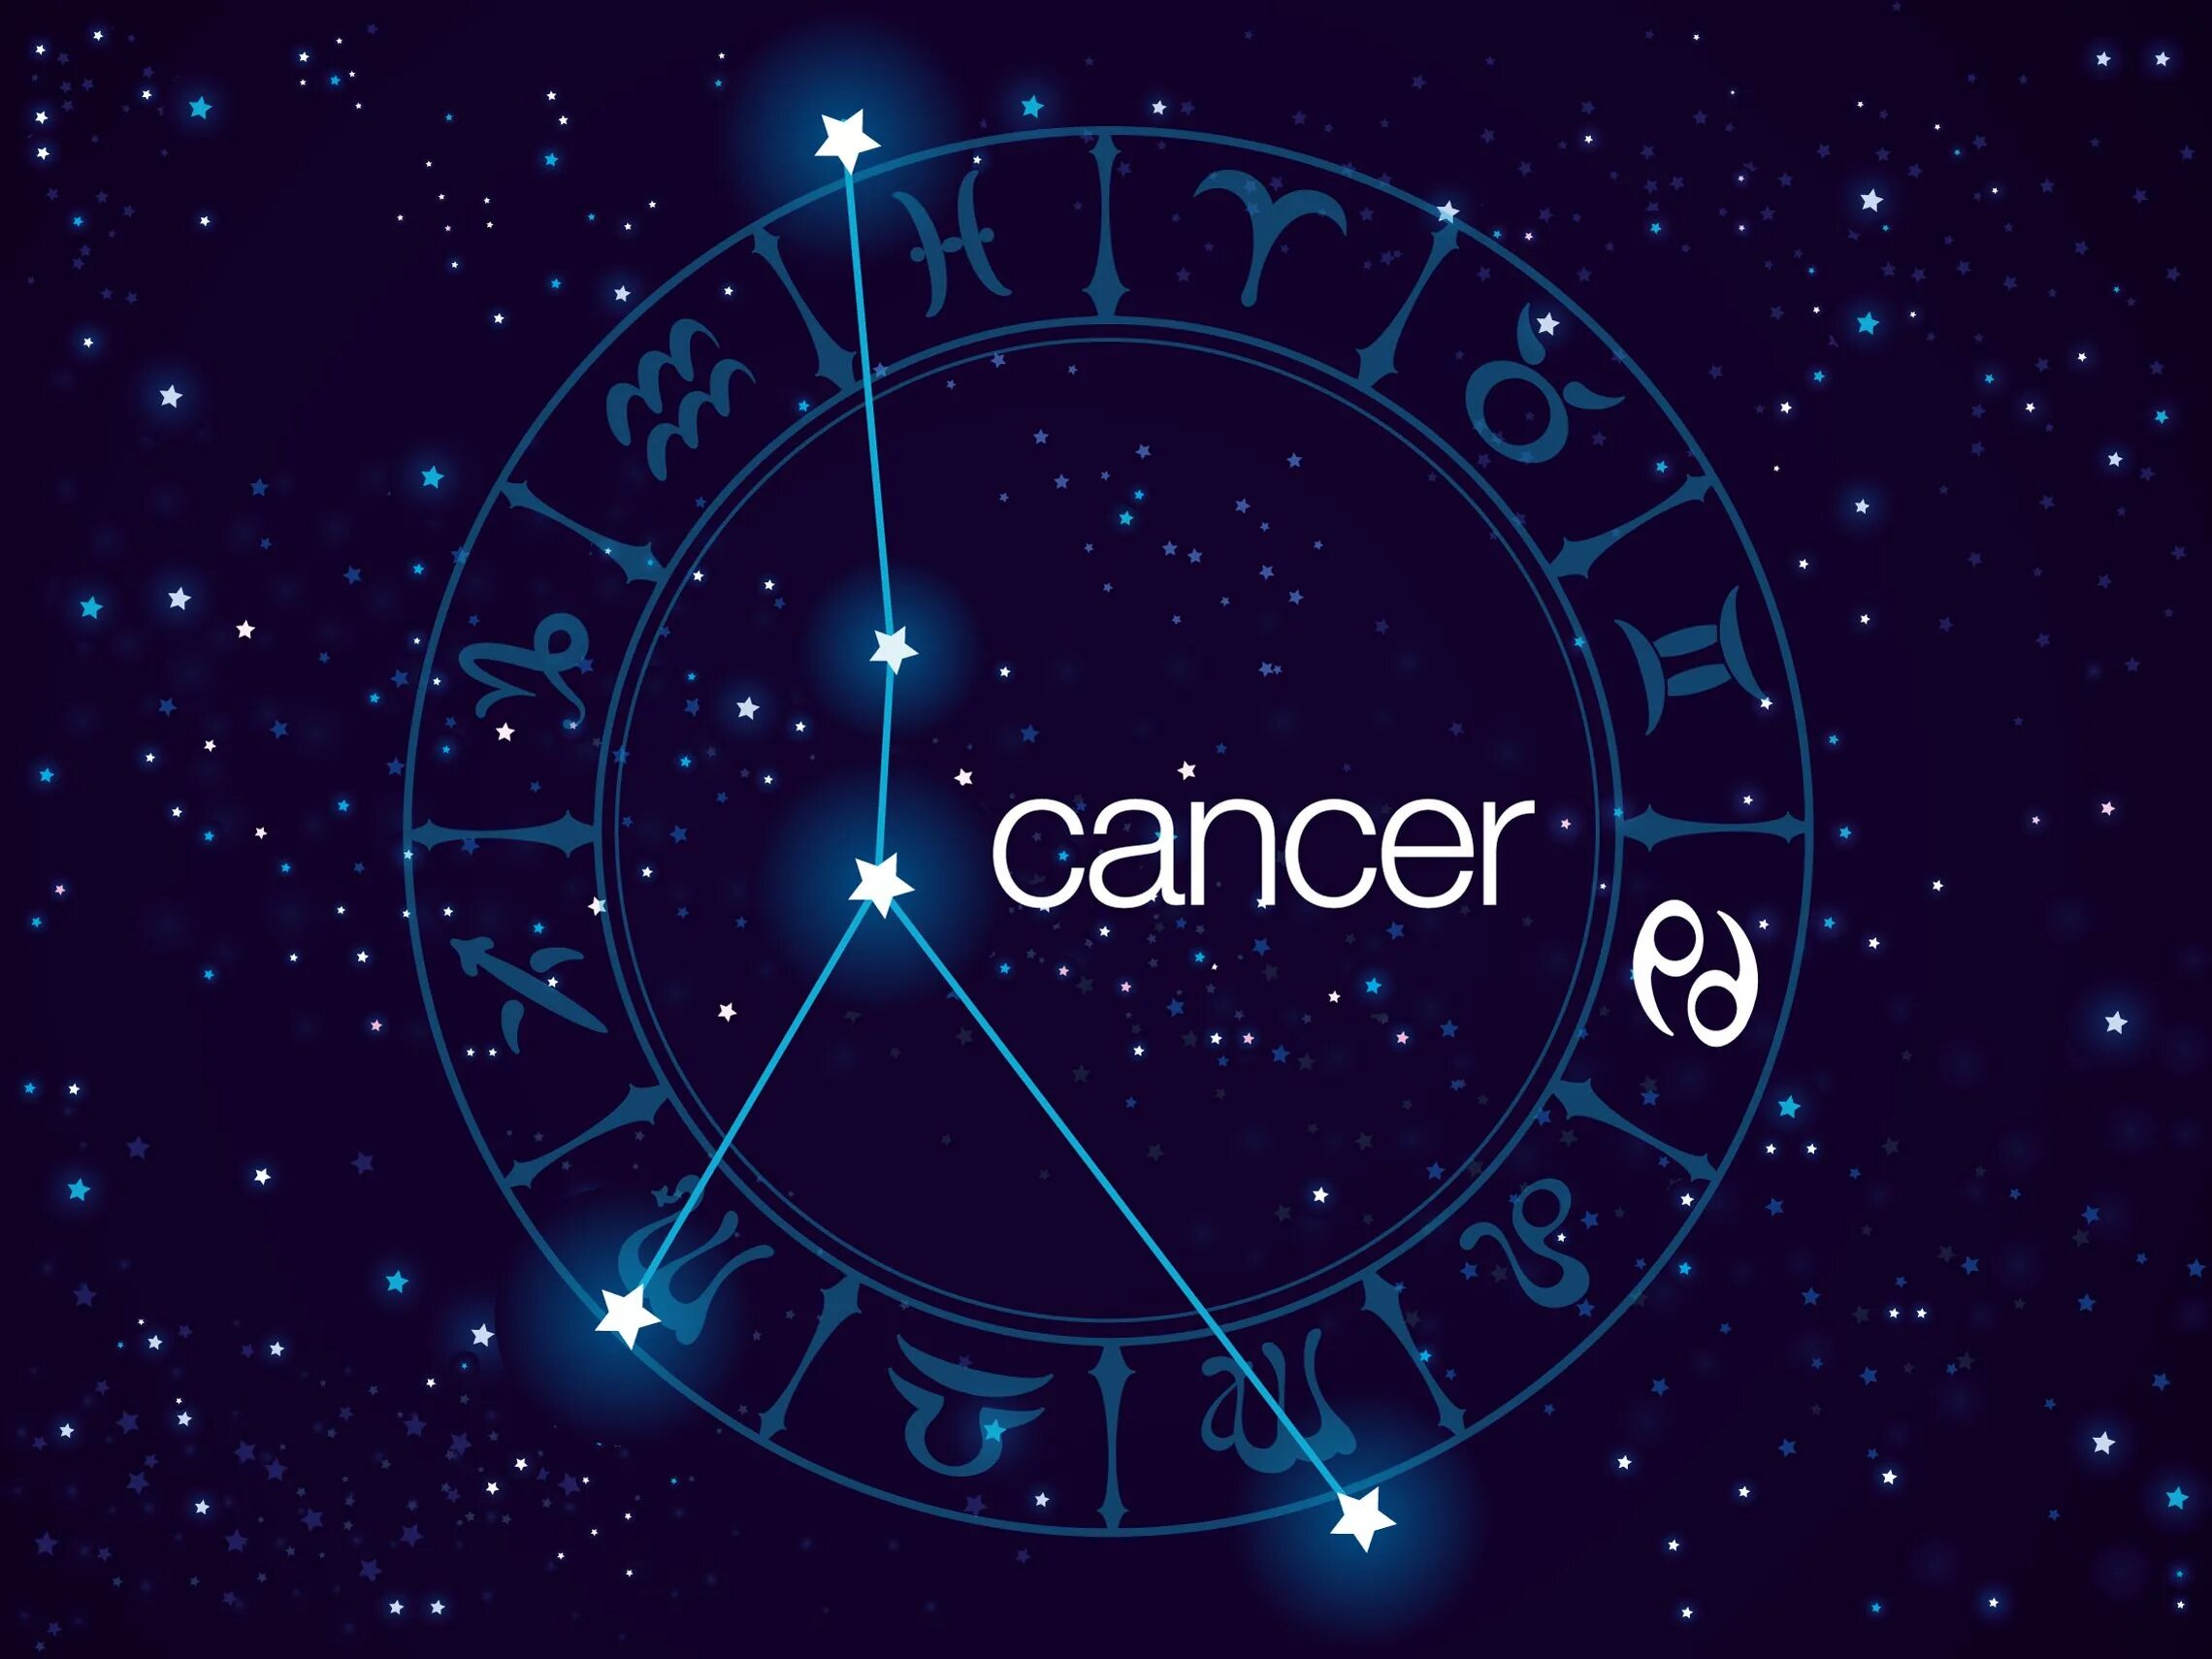 Гороскоп на сегодня знак рака. Созвездие. С͓о͓з͓в͓е͓з͓д͓и͓я͓э͓ р͓а͓к͓а͓. Знаки зодиака. Звезды гороскоп.